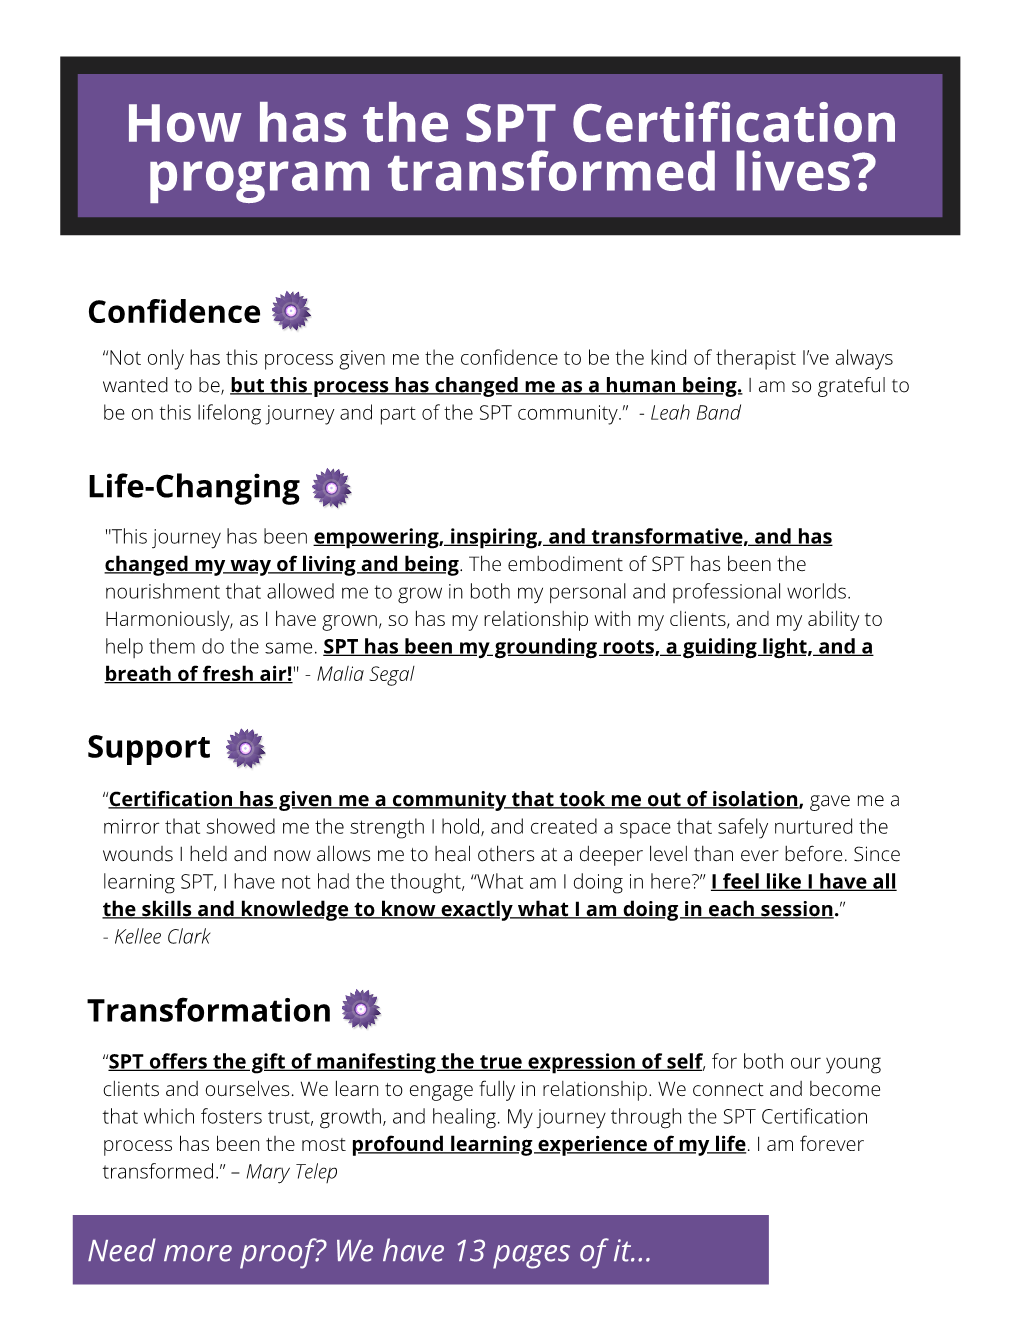 How Has the SPT Certification Program Transformed Lives?